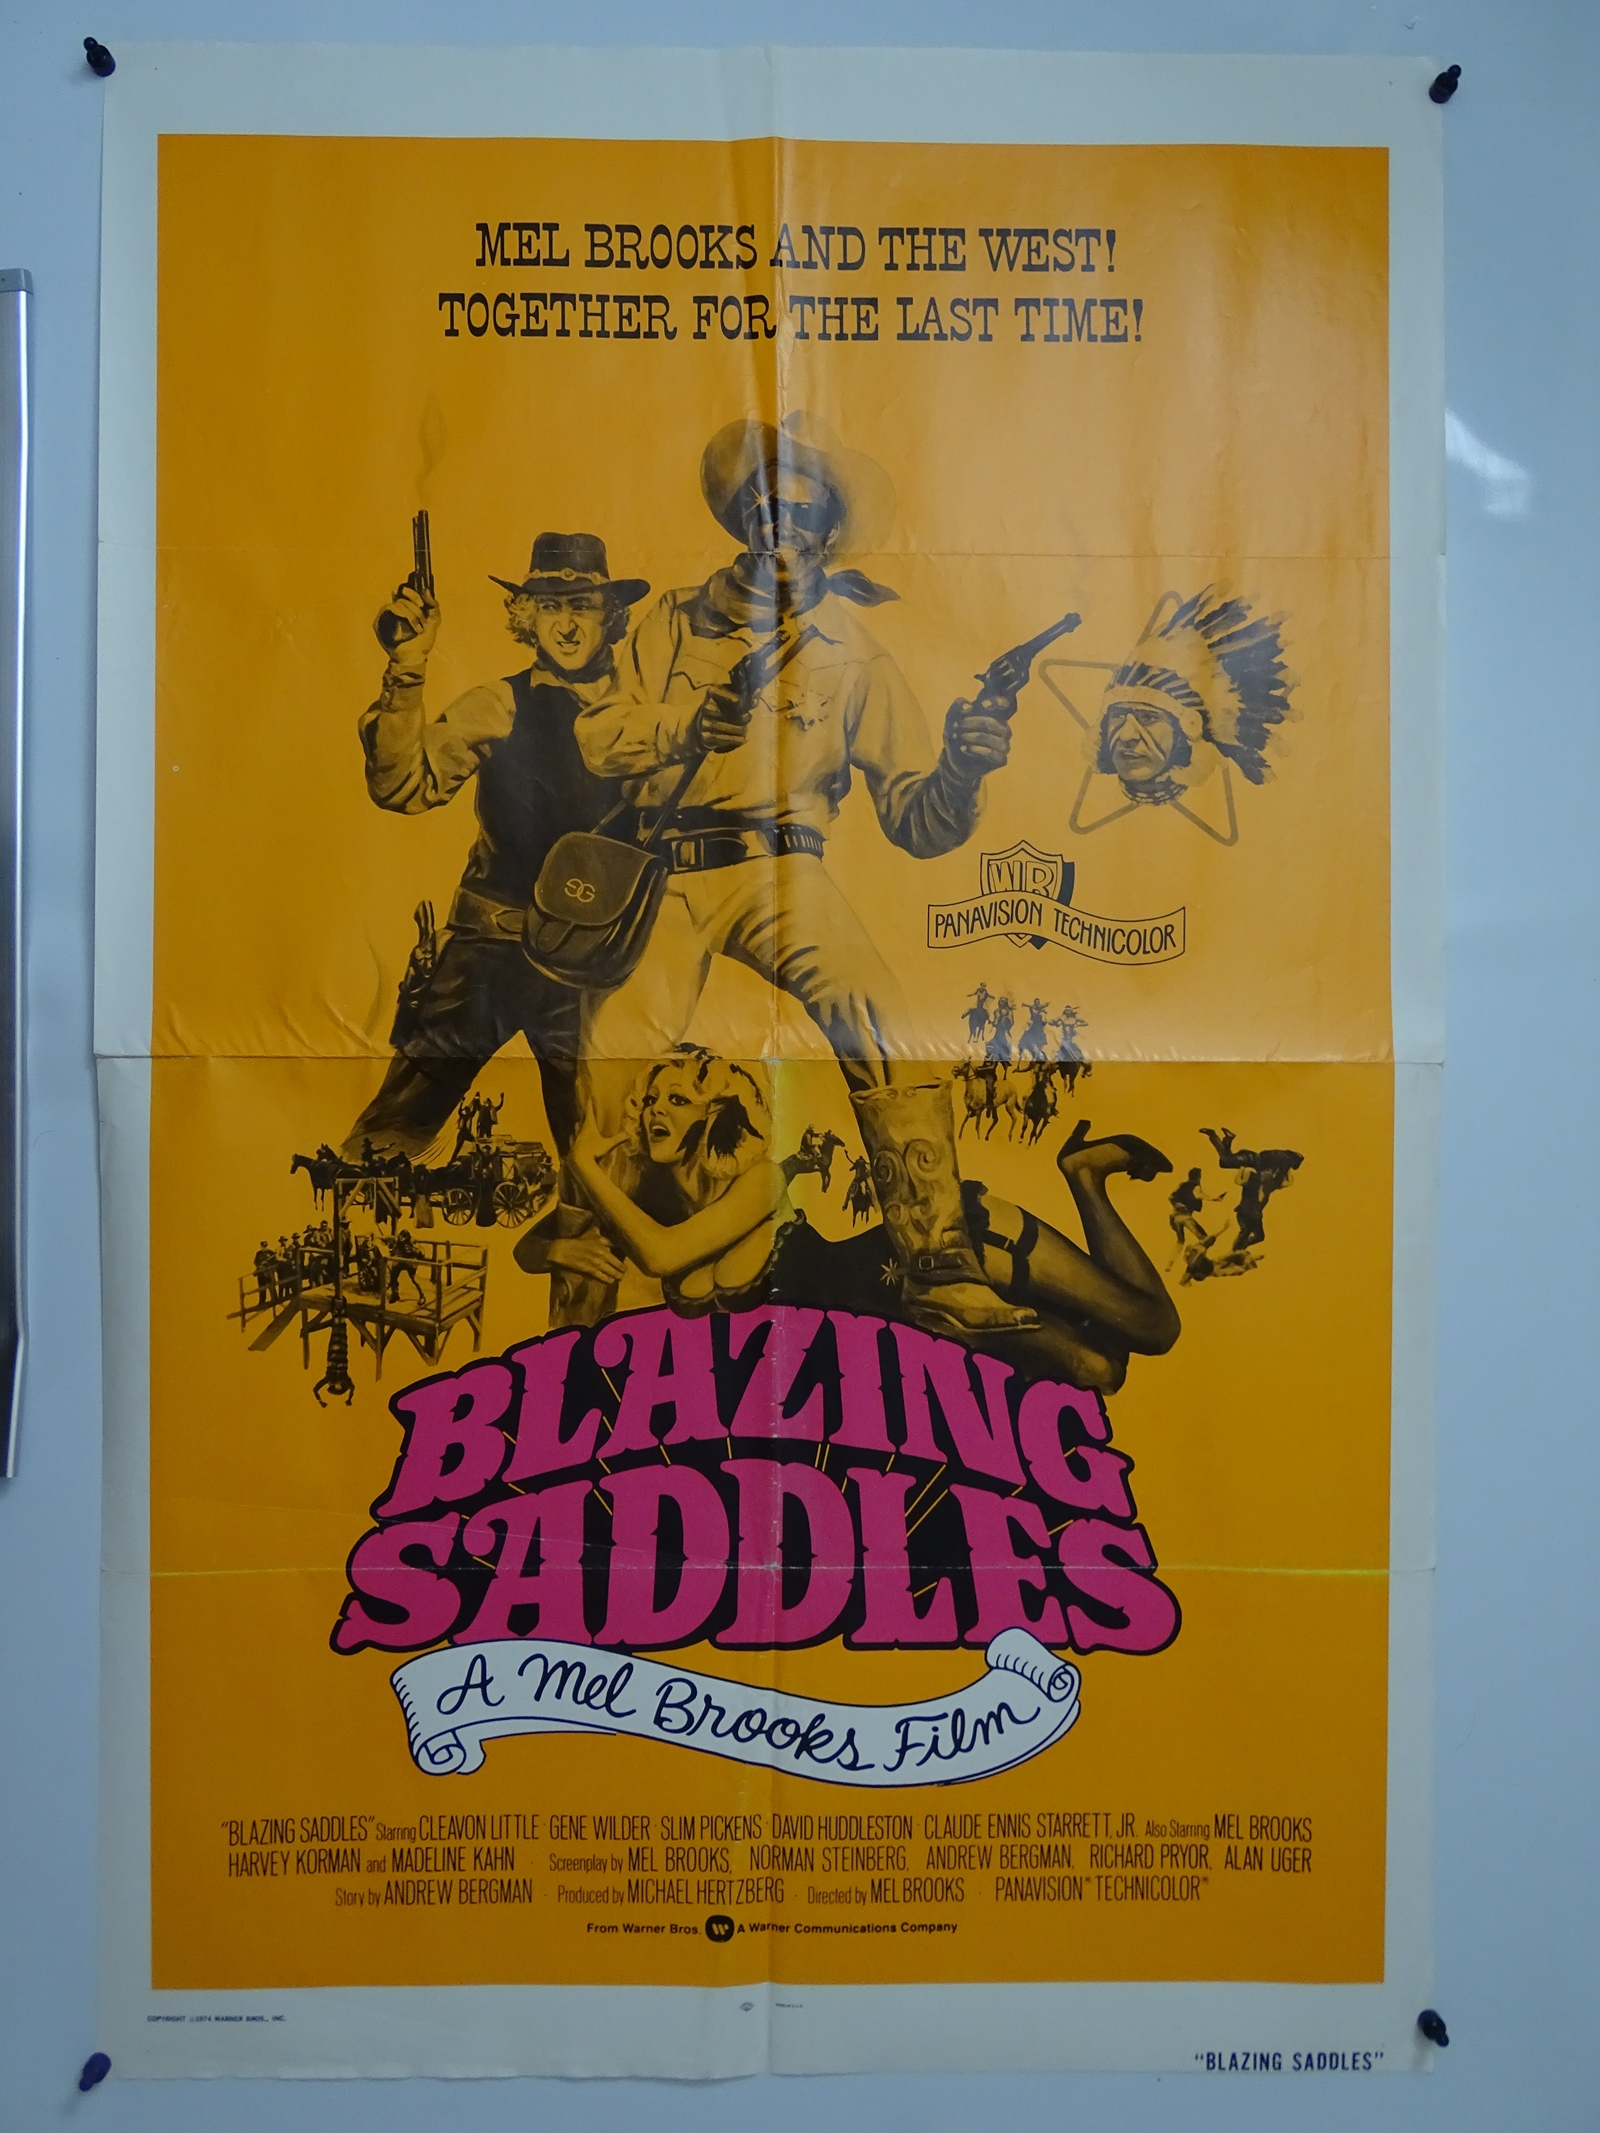 BLAZING SADDLES (1974) - International One Sheet movie poster - cast montage on orange